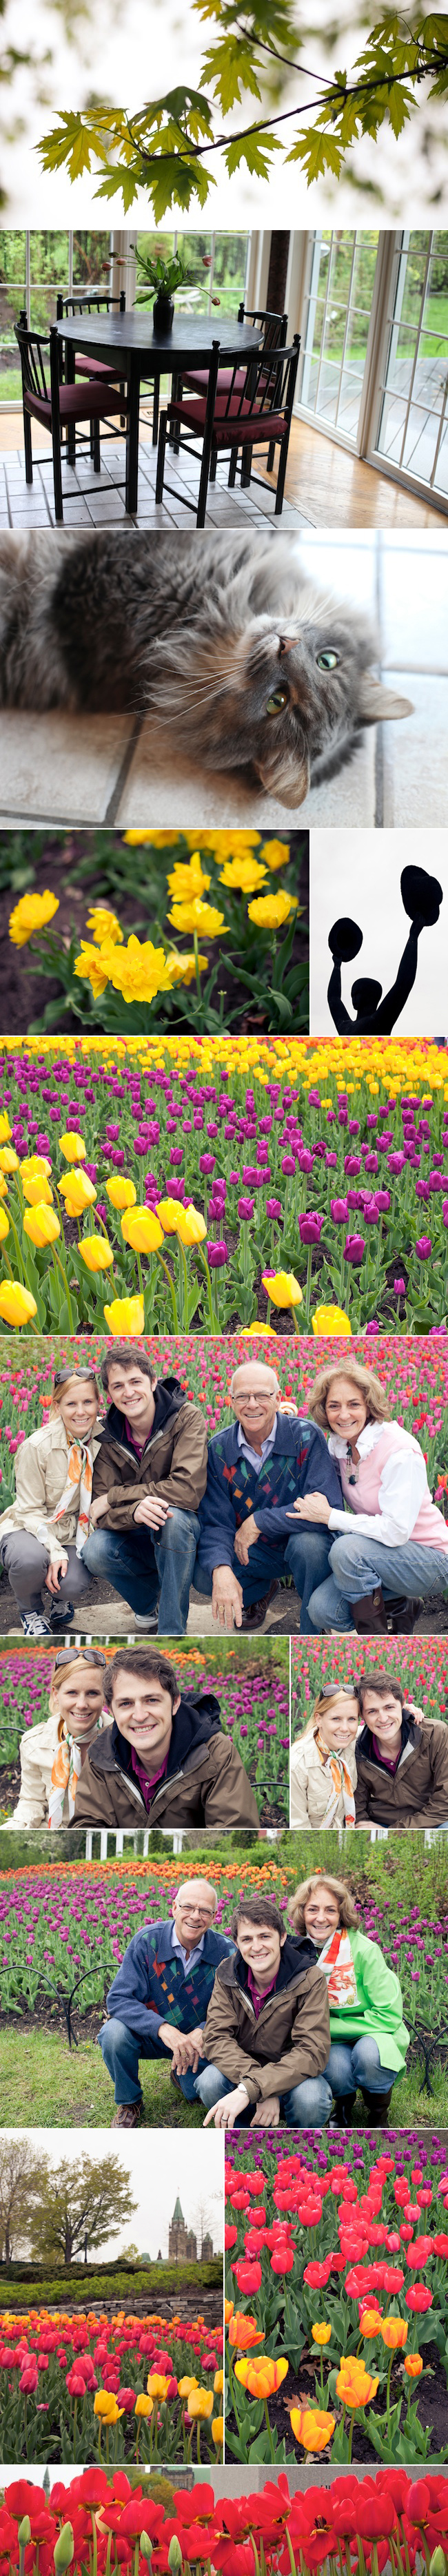 ottawa-tulip-festival-tt